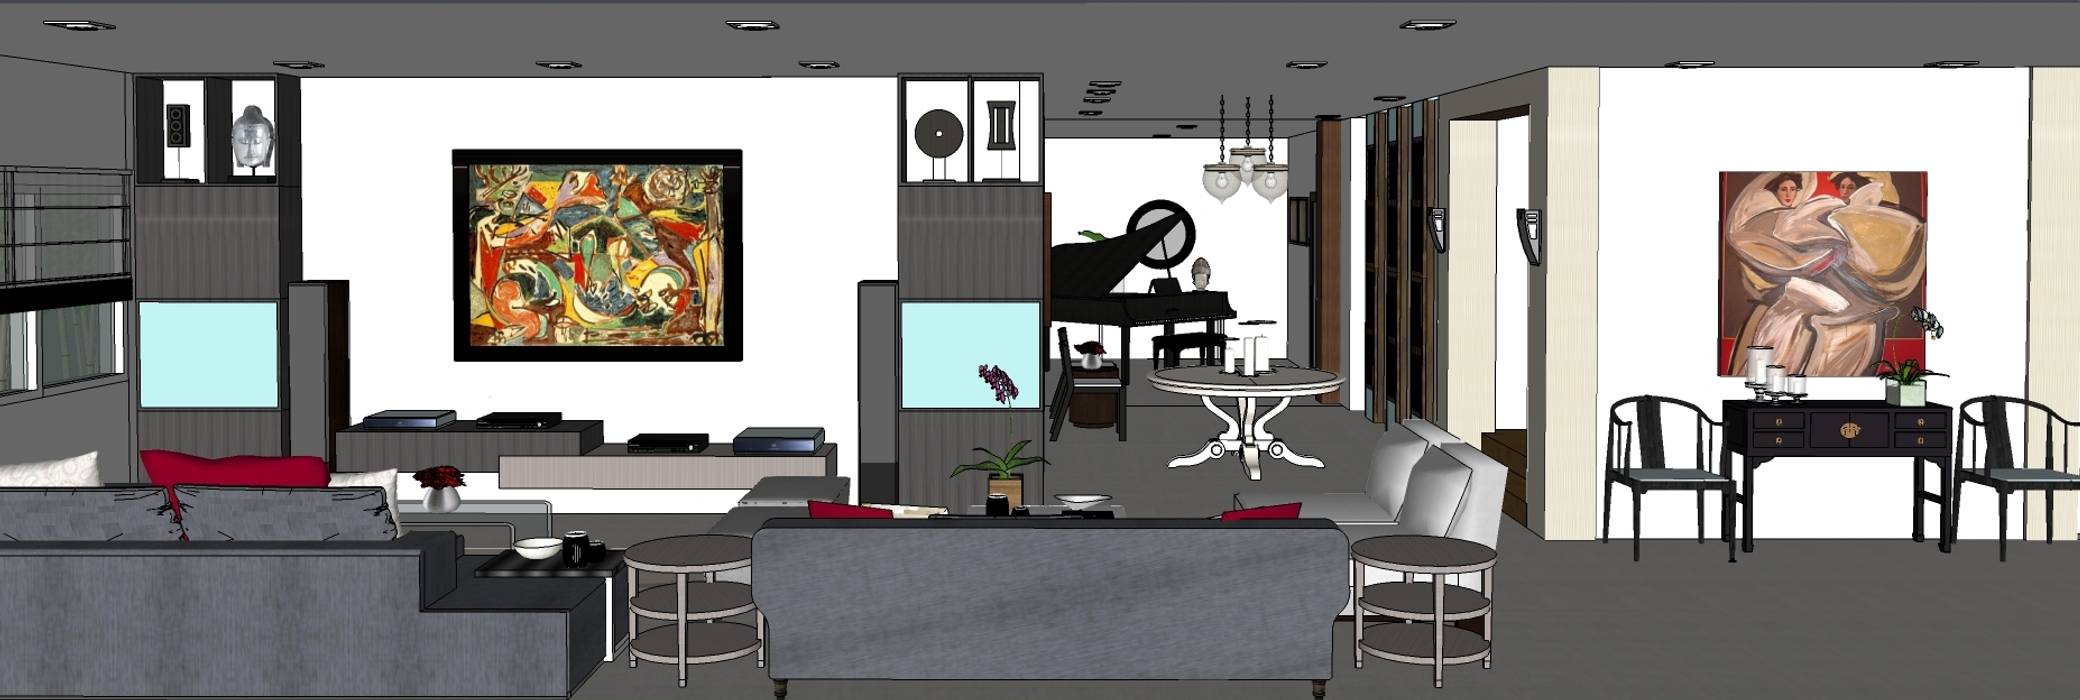 2011 PROJECTS, MKC DESIGN MKC DESIGN Living room